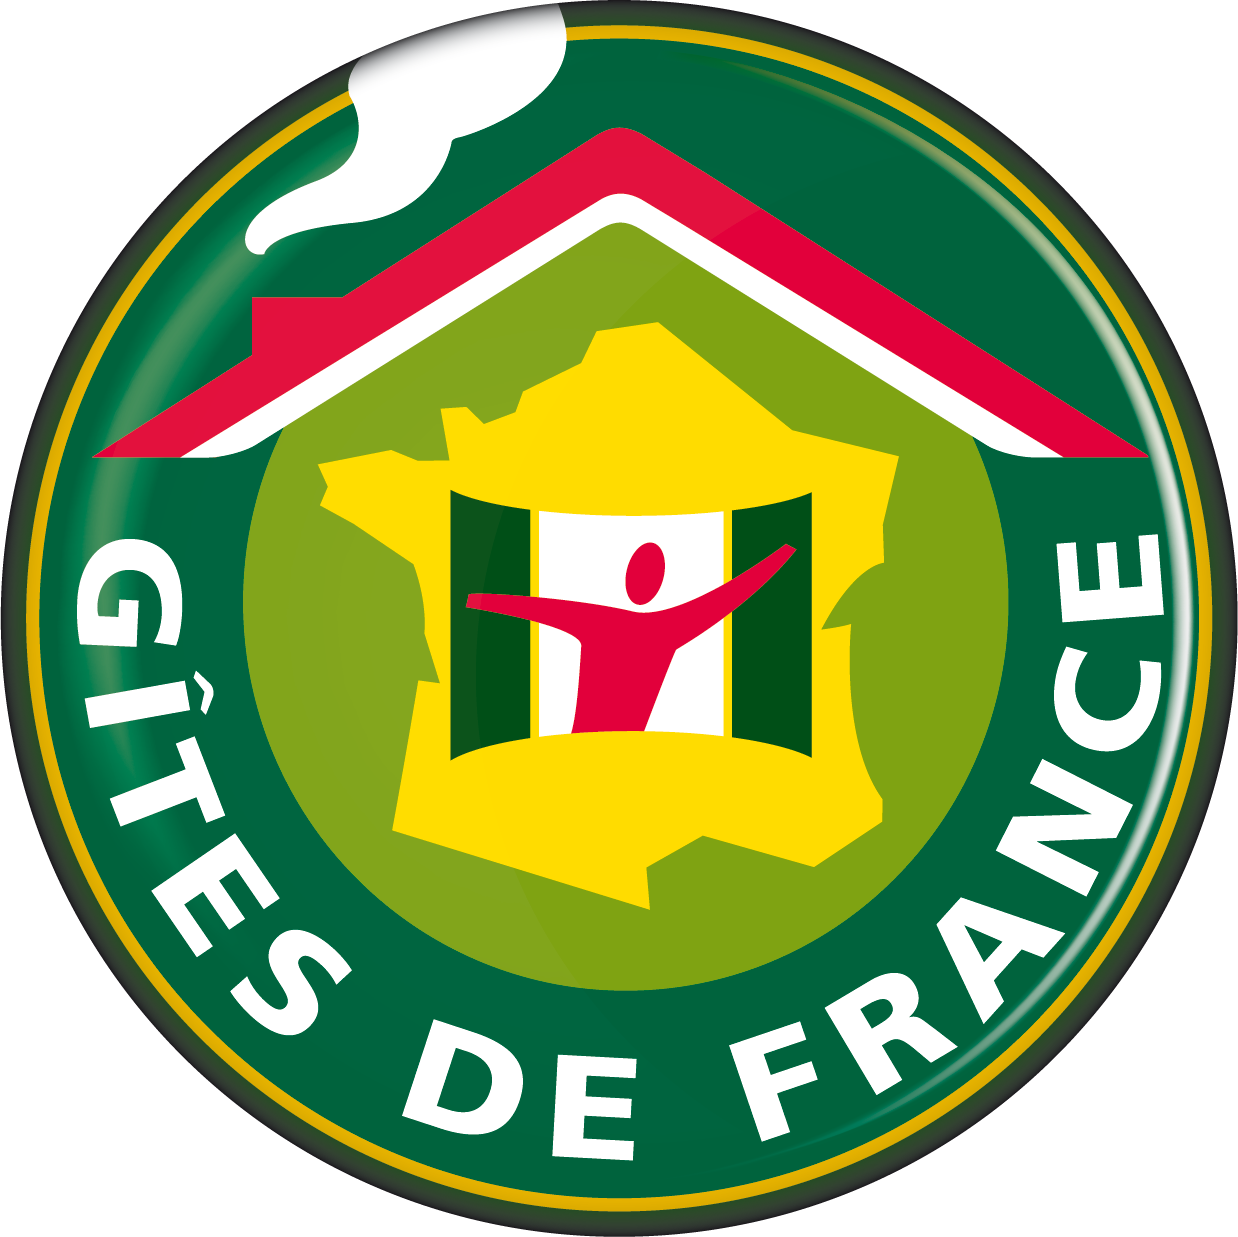 Gîtes_de_France_logo_2008